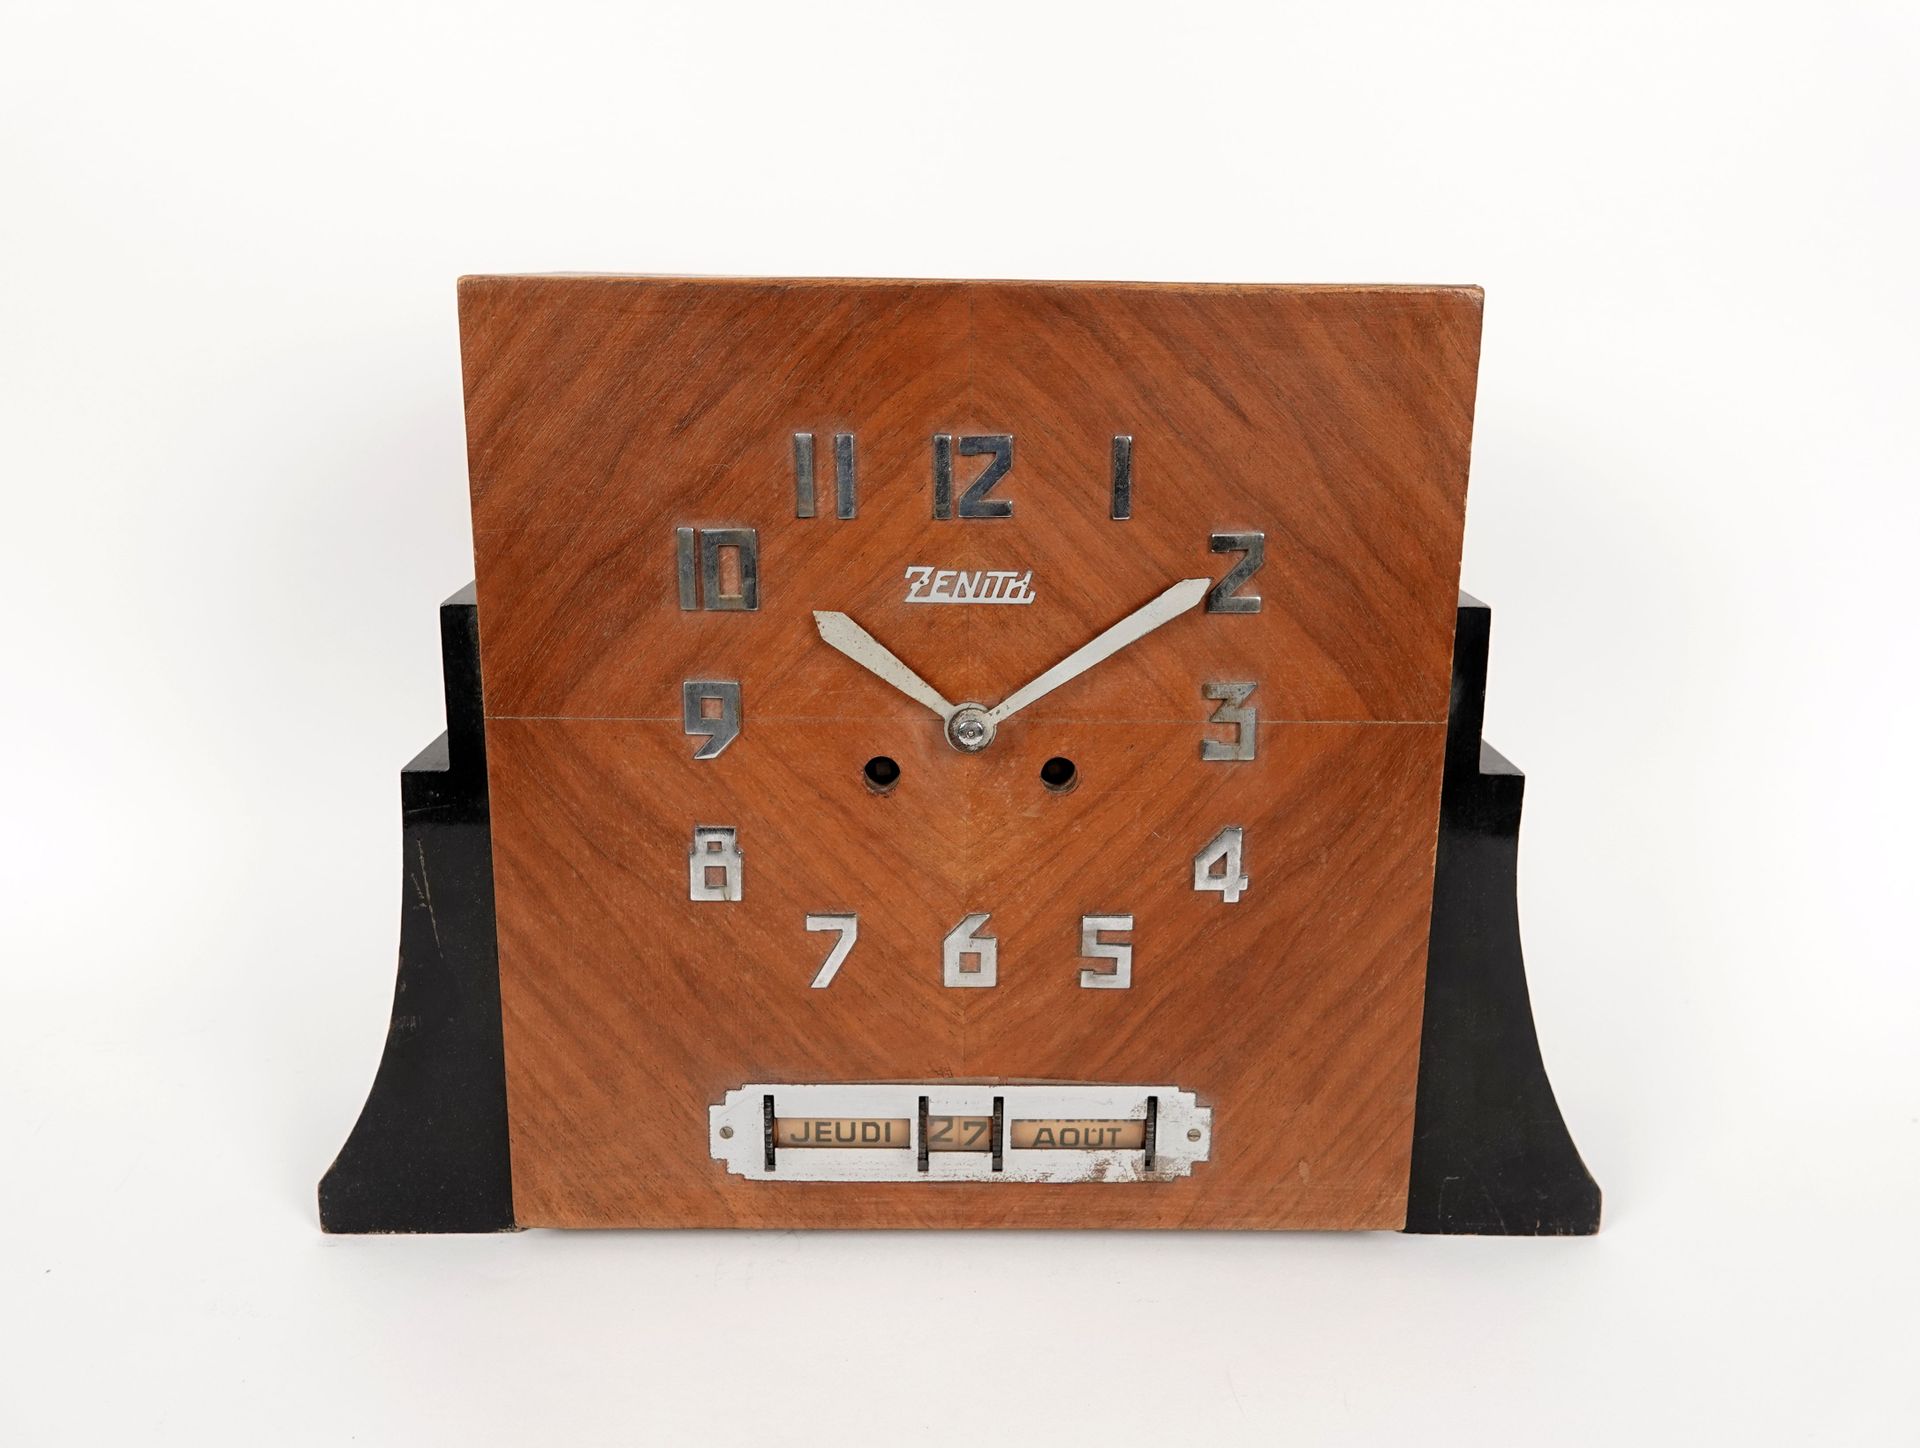 Null Zenith
Wooden desk or mantel clock, applied Arabic numerals, sword-shaped h&hellip;